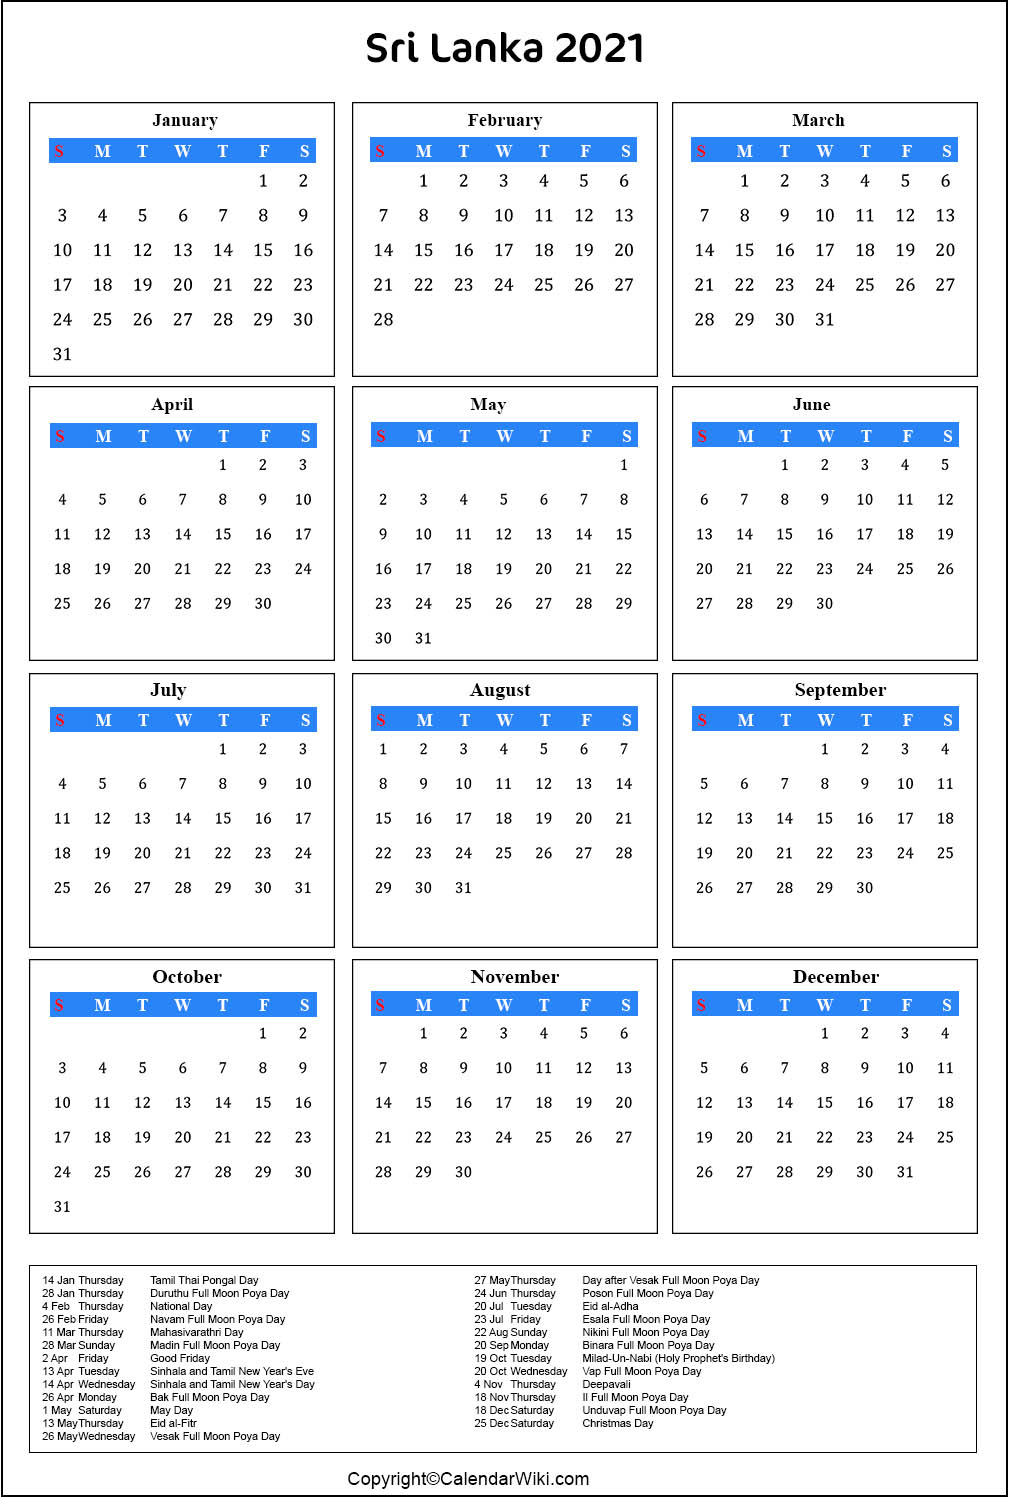 printable-srilanka-calendar-2021-with-holidays-public-holidays